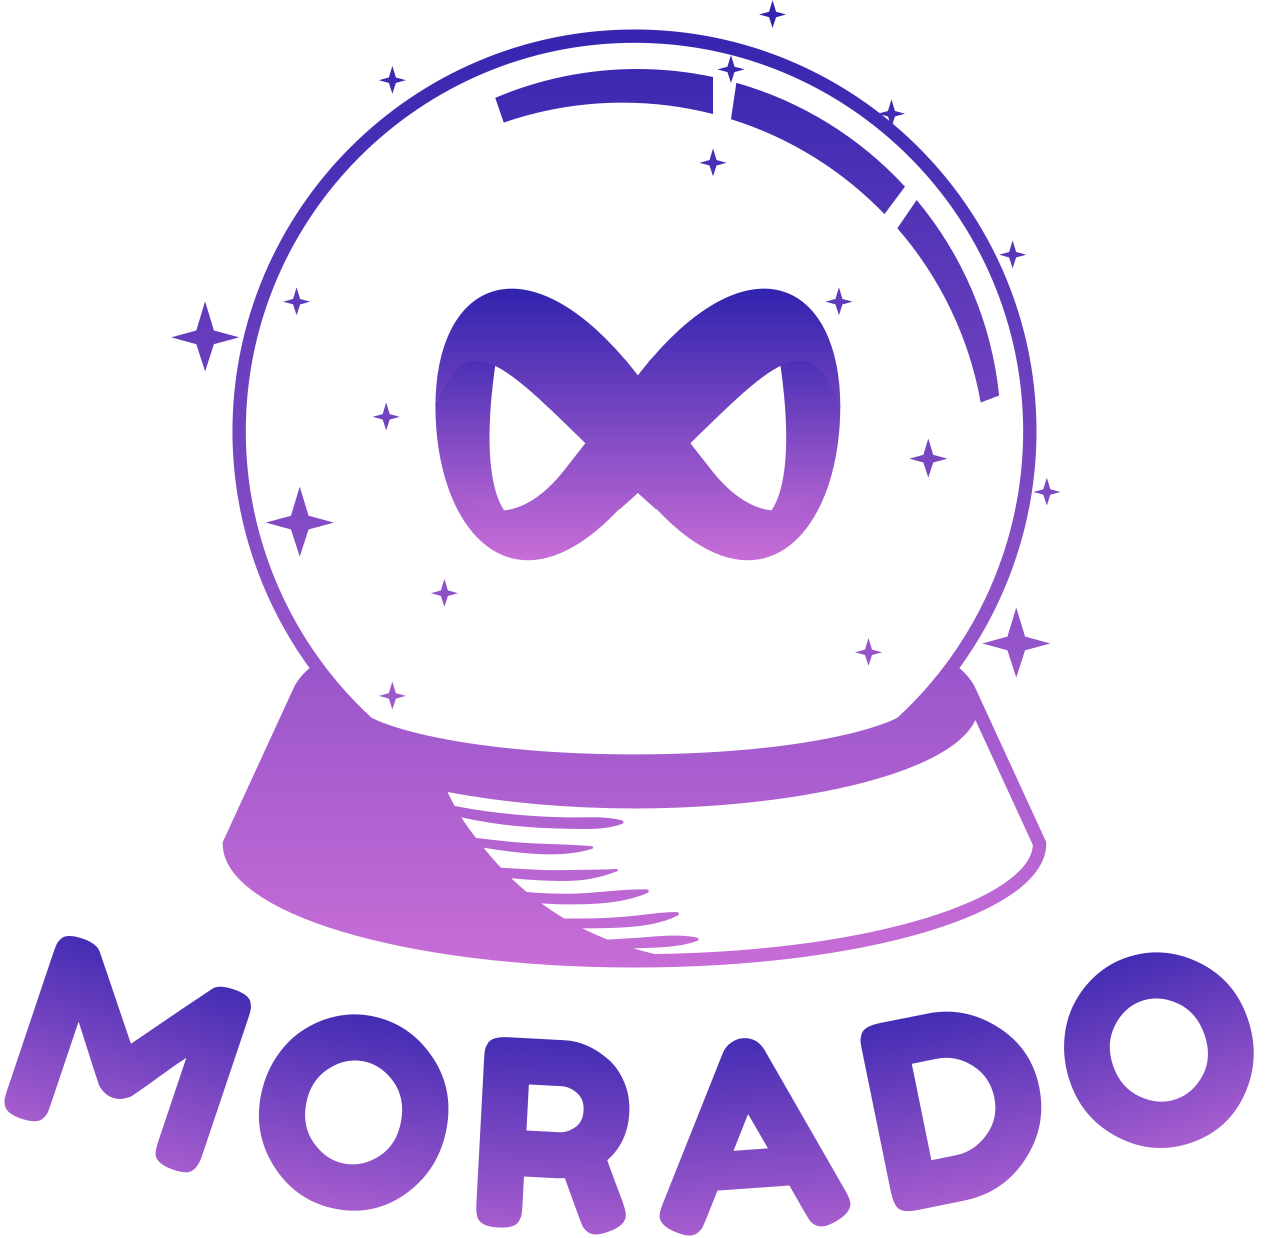 MORADO's logo